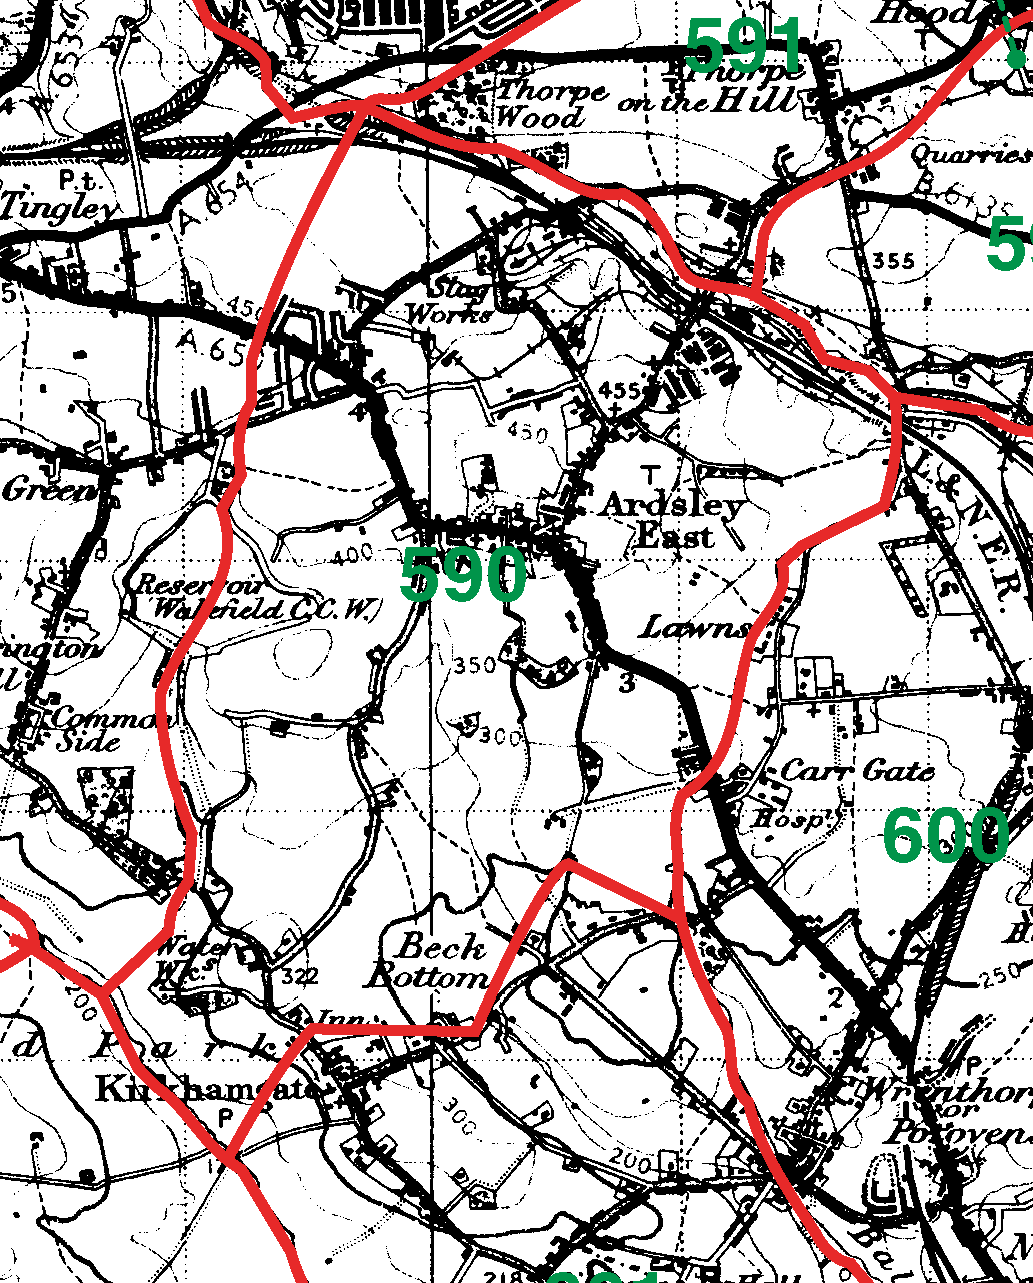 East Ardsley boundaries map